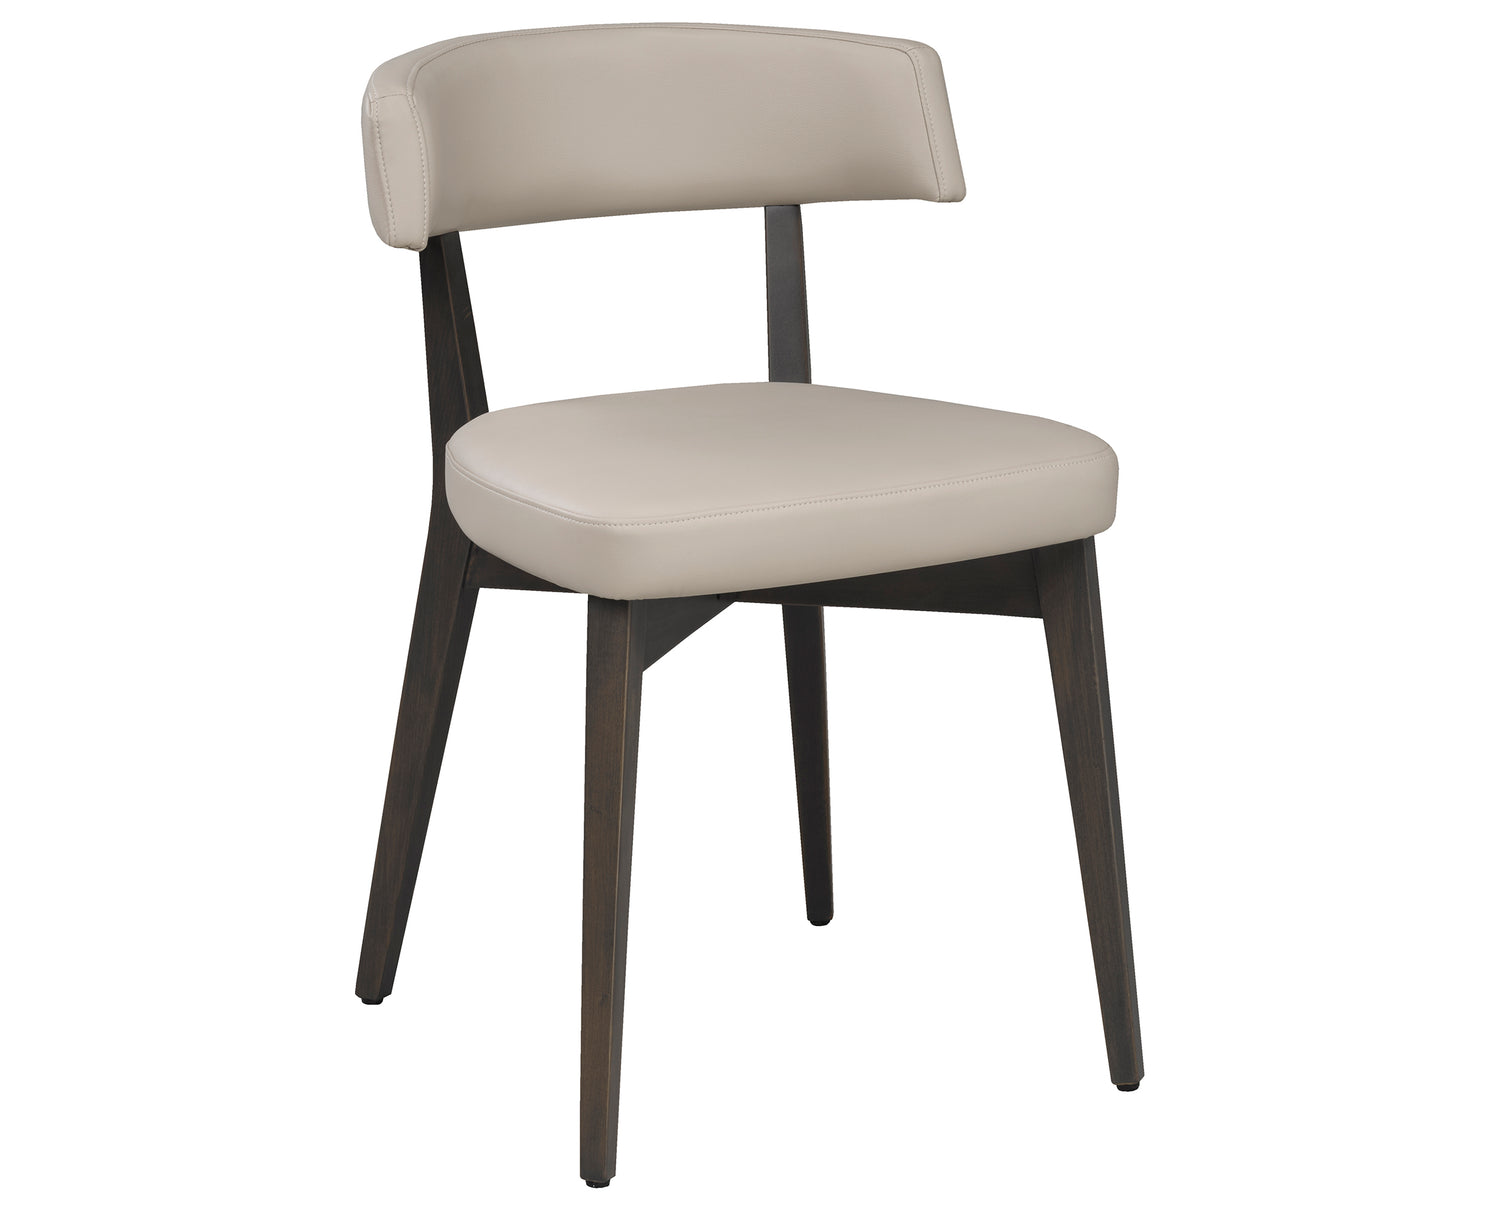 Chair as Shown | Cardinal Woodcraft Myra Dining Chair | Valley Ridge Furniture